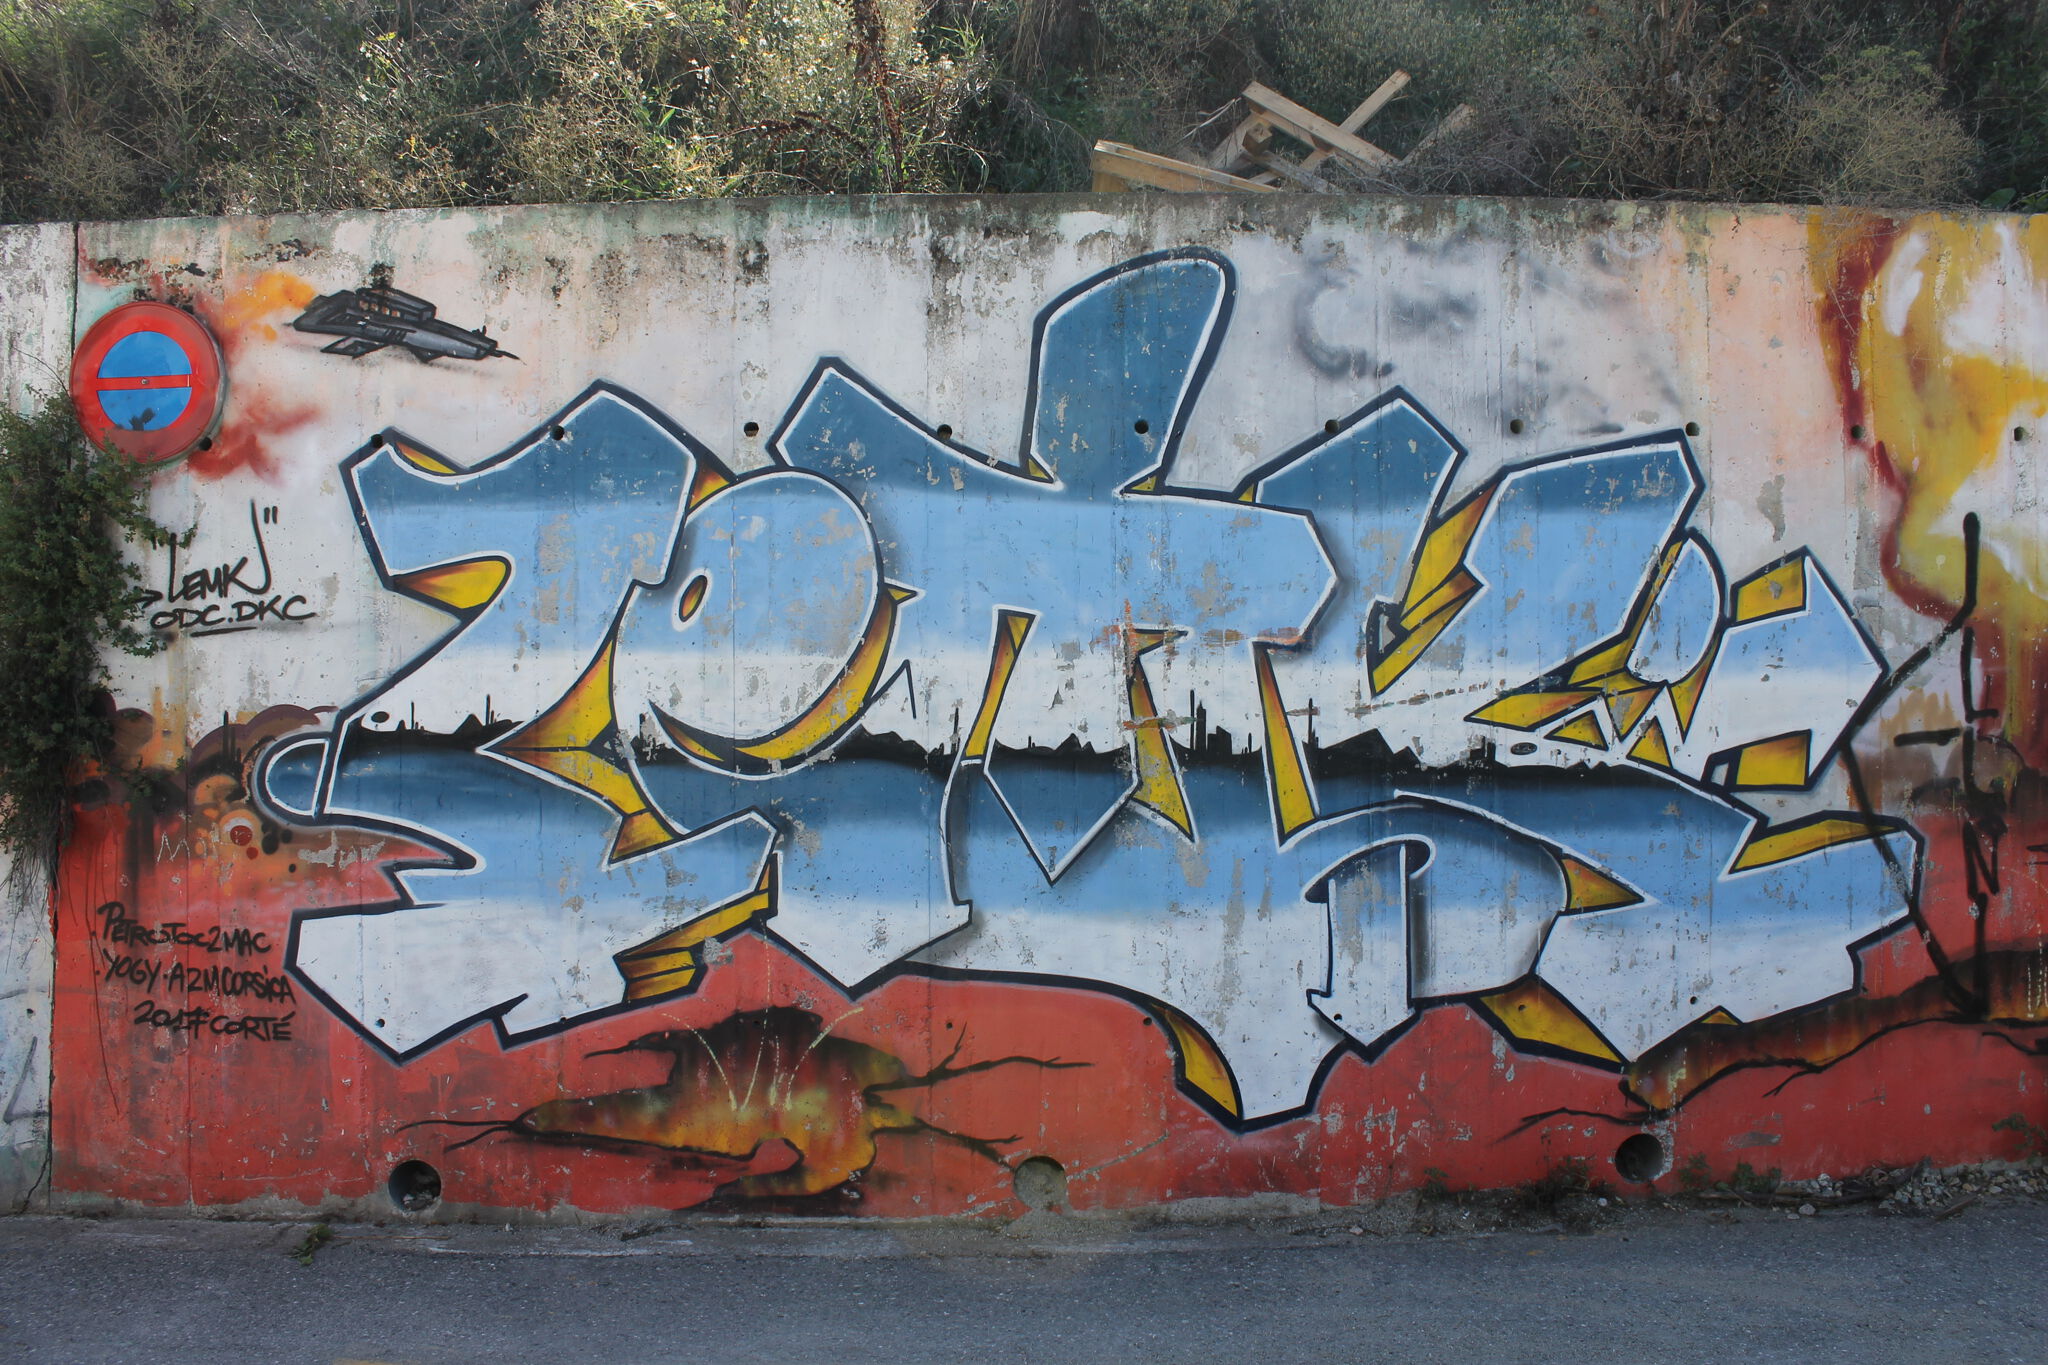 Lemk&mdash;Graffiti Insulaire